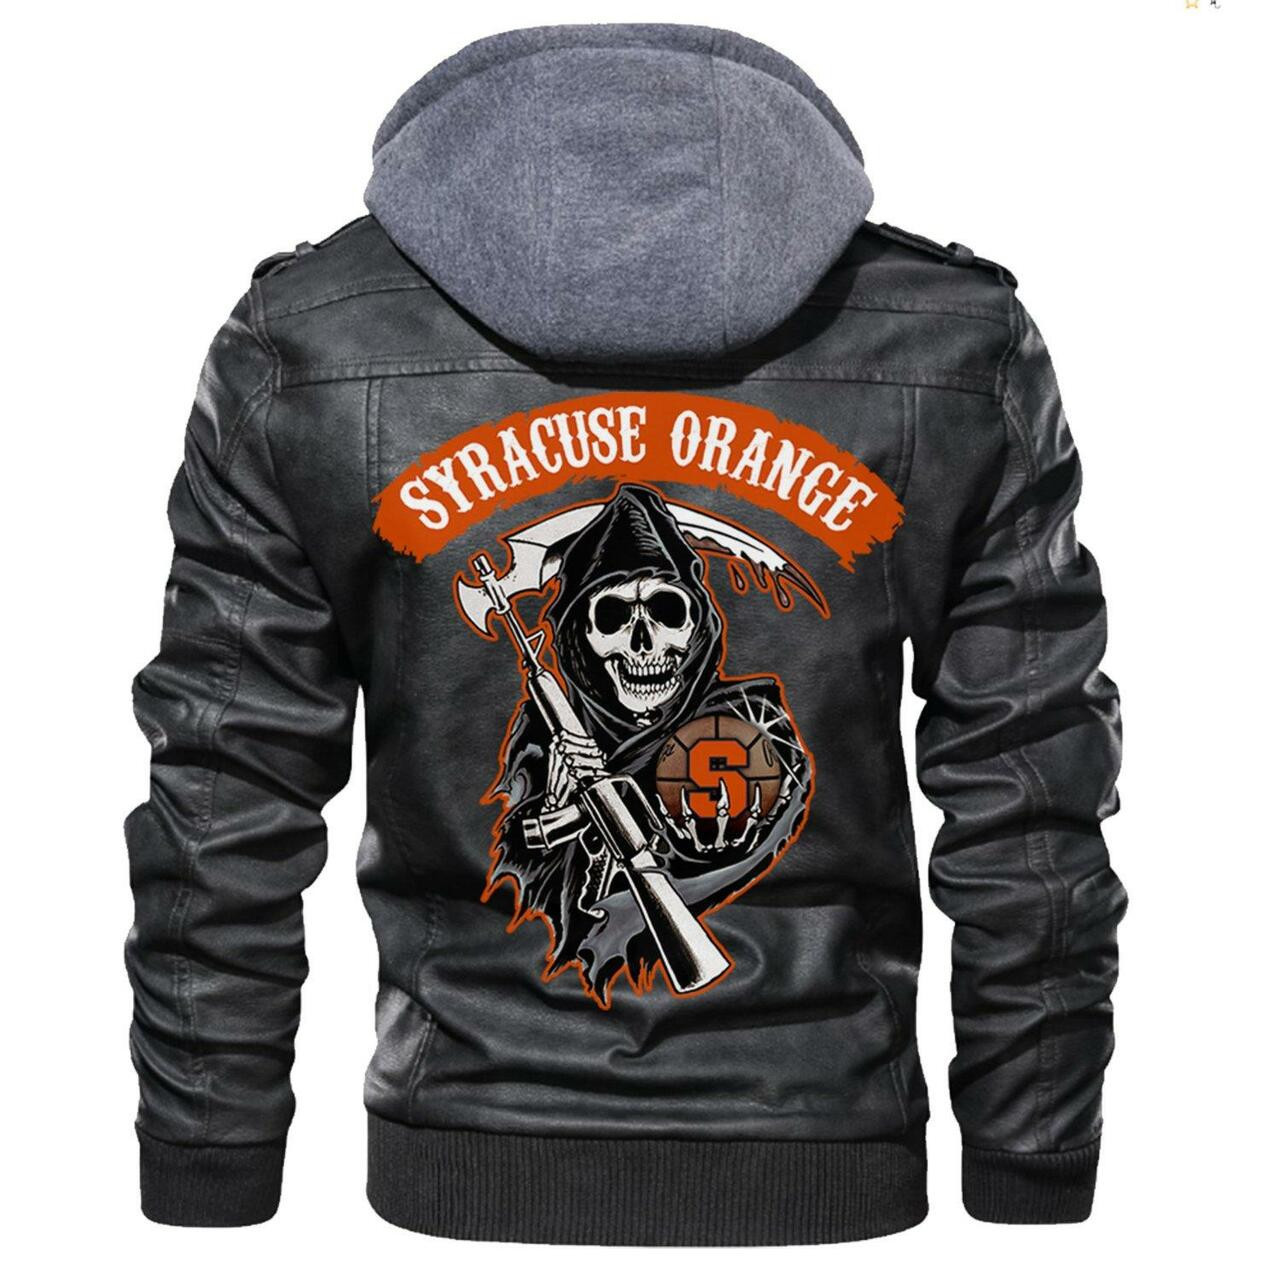 Top leather jacket Sells Best on Techcomshop 36